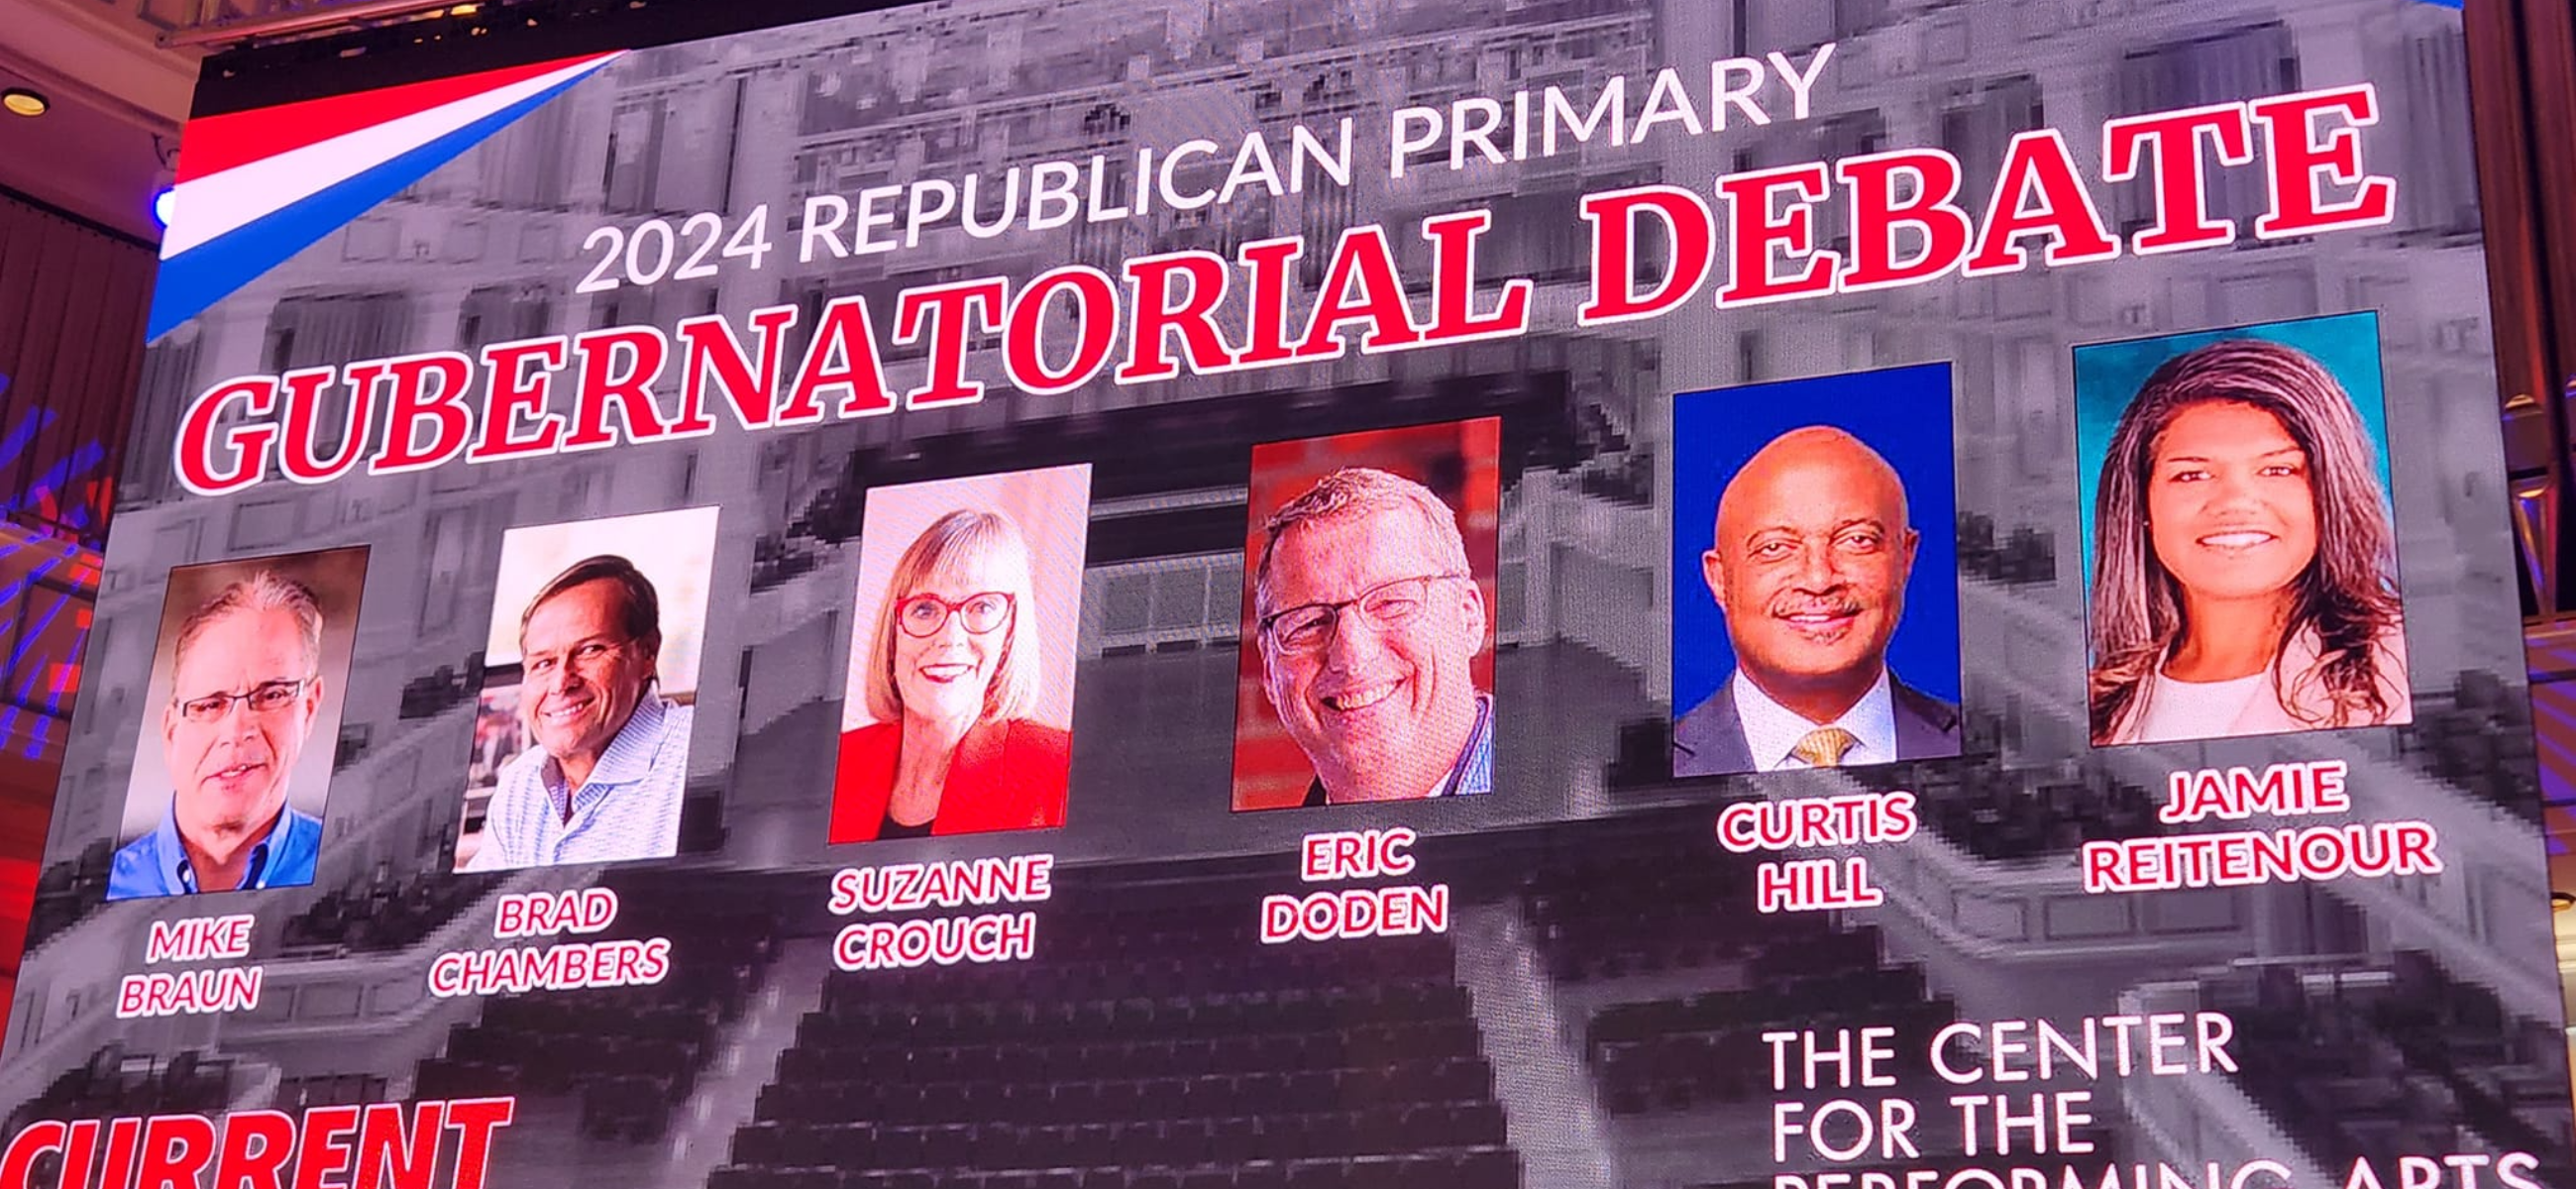 Indiana Republican primary gubernatorial debate banner